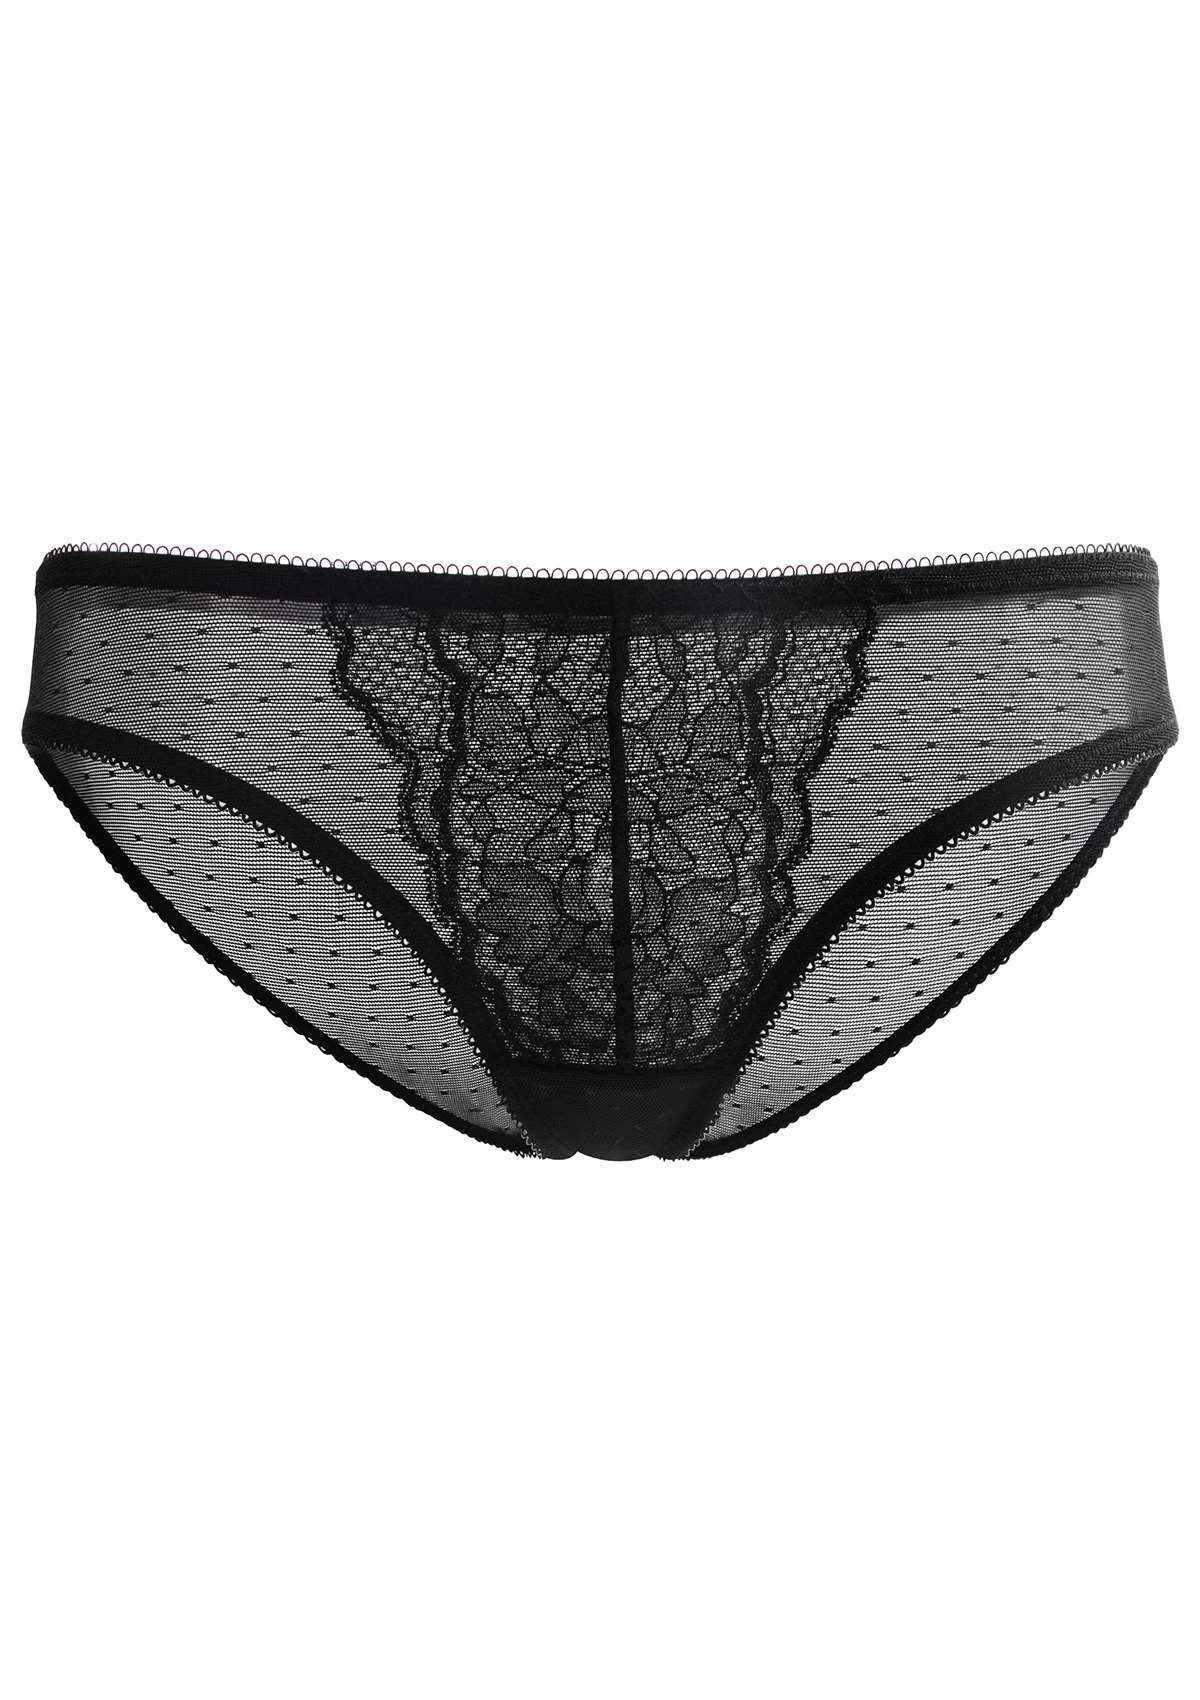 HSIA Enchante Sheer Lace Mesh Mid Rise Bikini Underwear - XXXL / Dark Gray